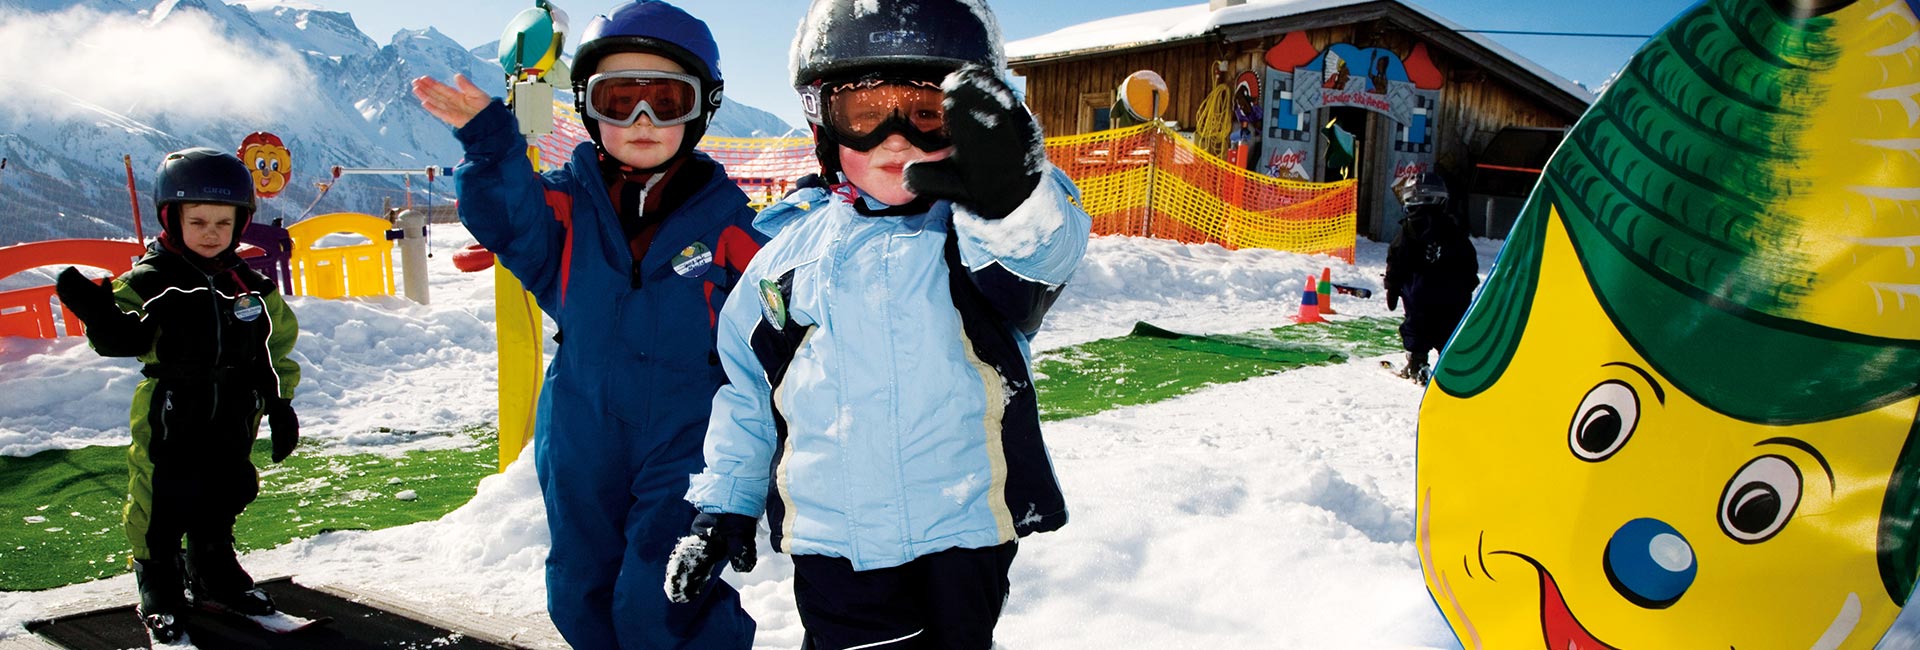 Children learn the Fun of Winter Sports